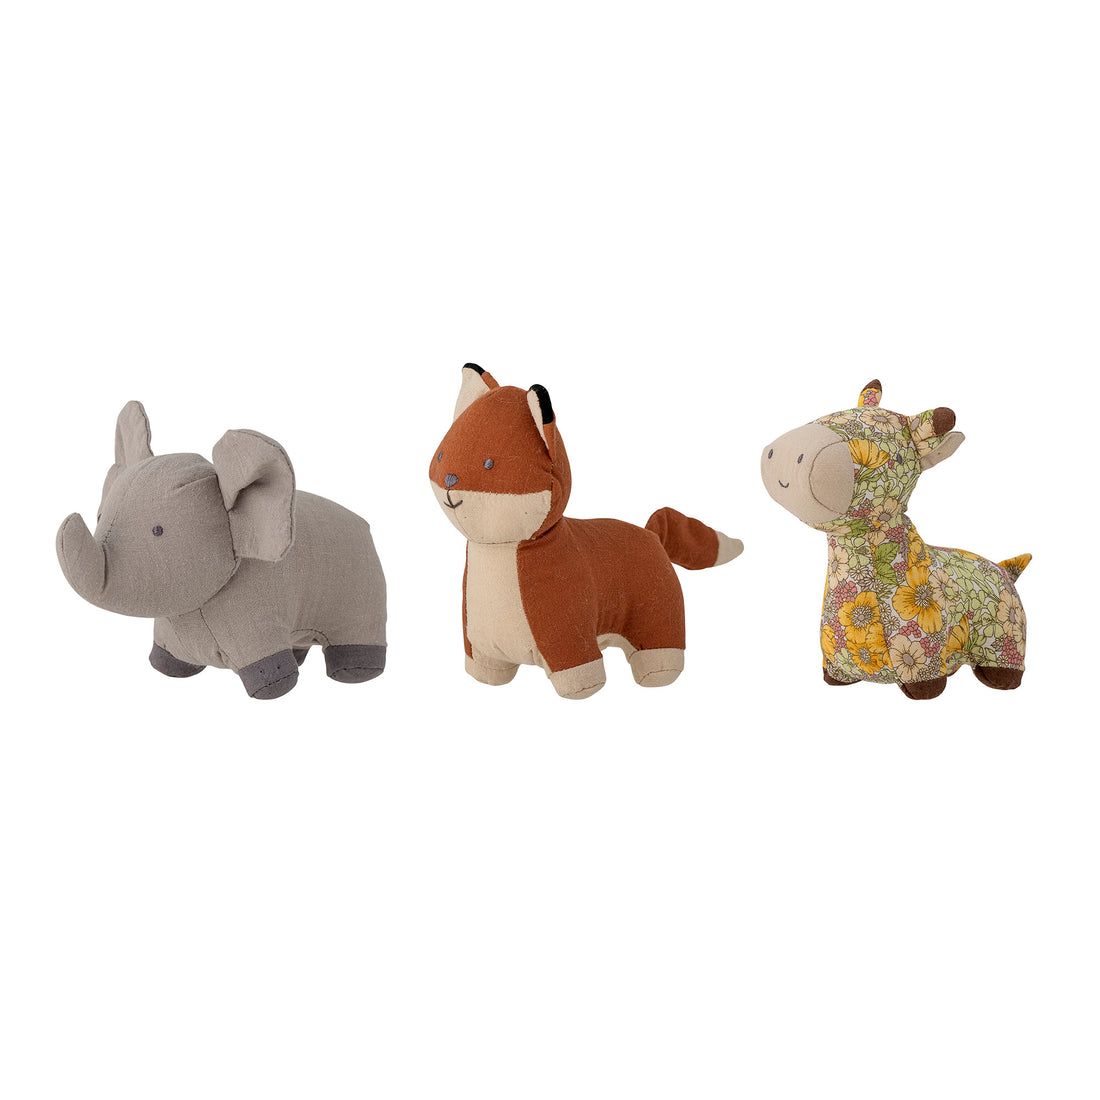 BLOOMINGVILLE MINI Rafe Soft Toy, Brun, Bomuld - L15xH7,5xW7,5 cm, Set of 3 - DesignGaragen.dk.